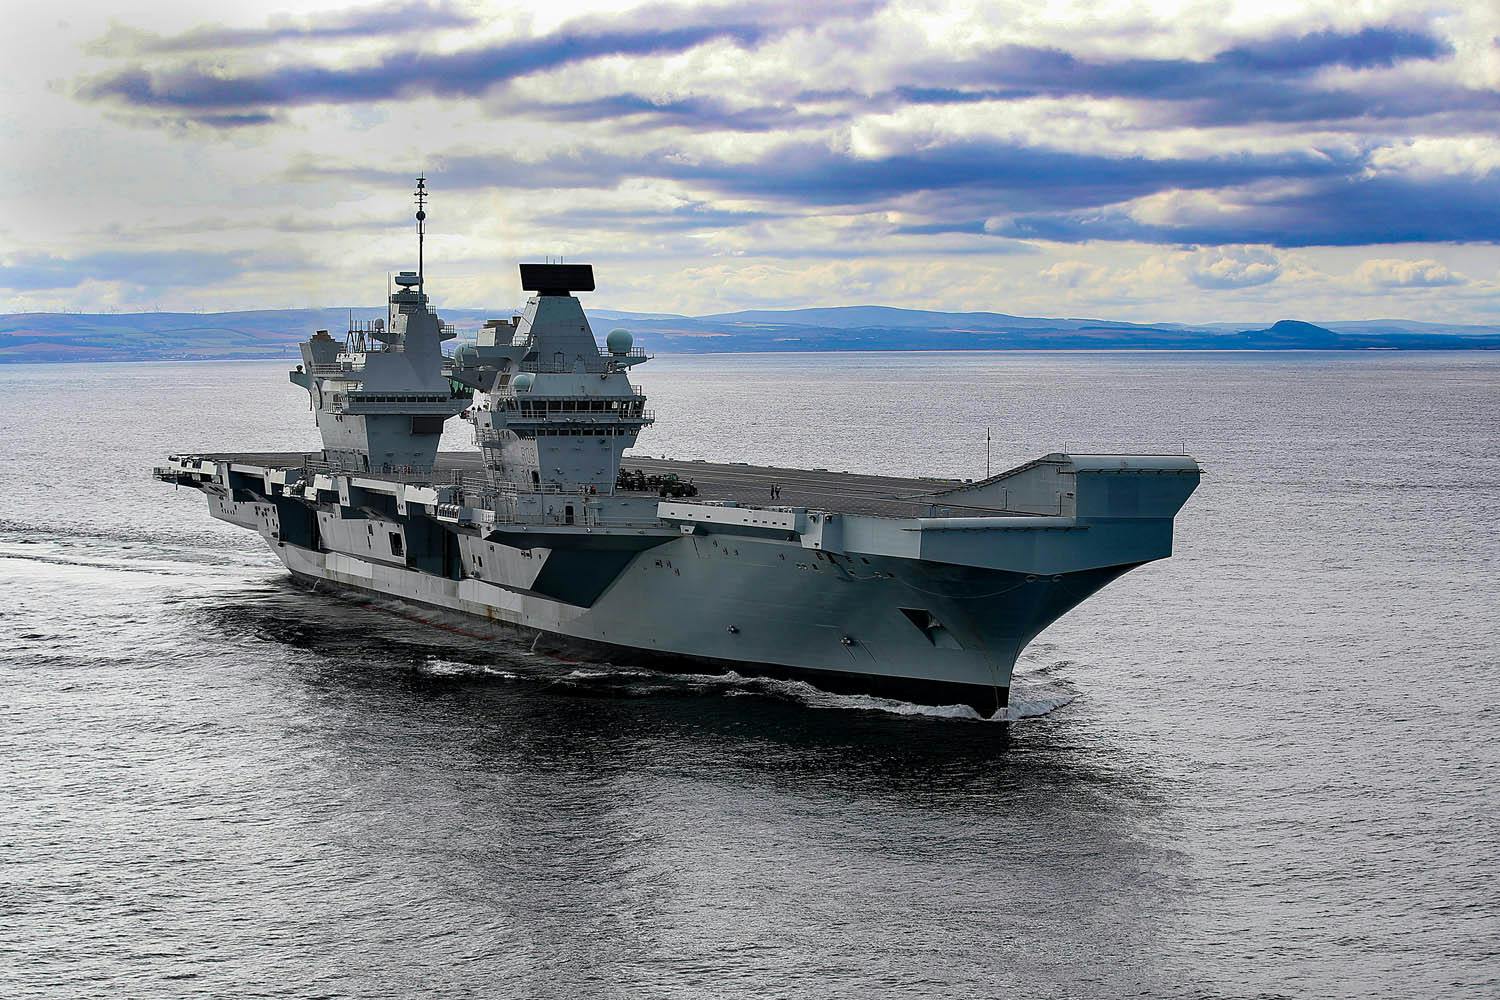 HMS Prince of Wales returns to sea